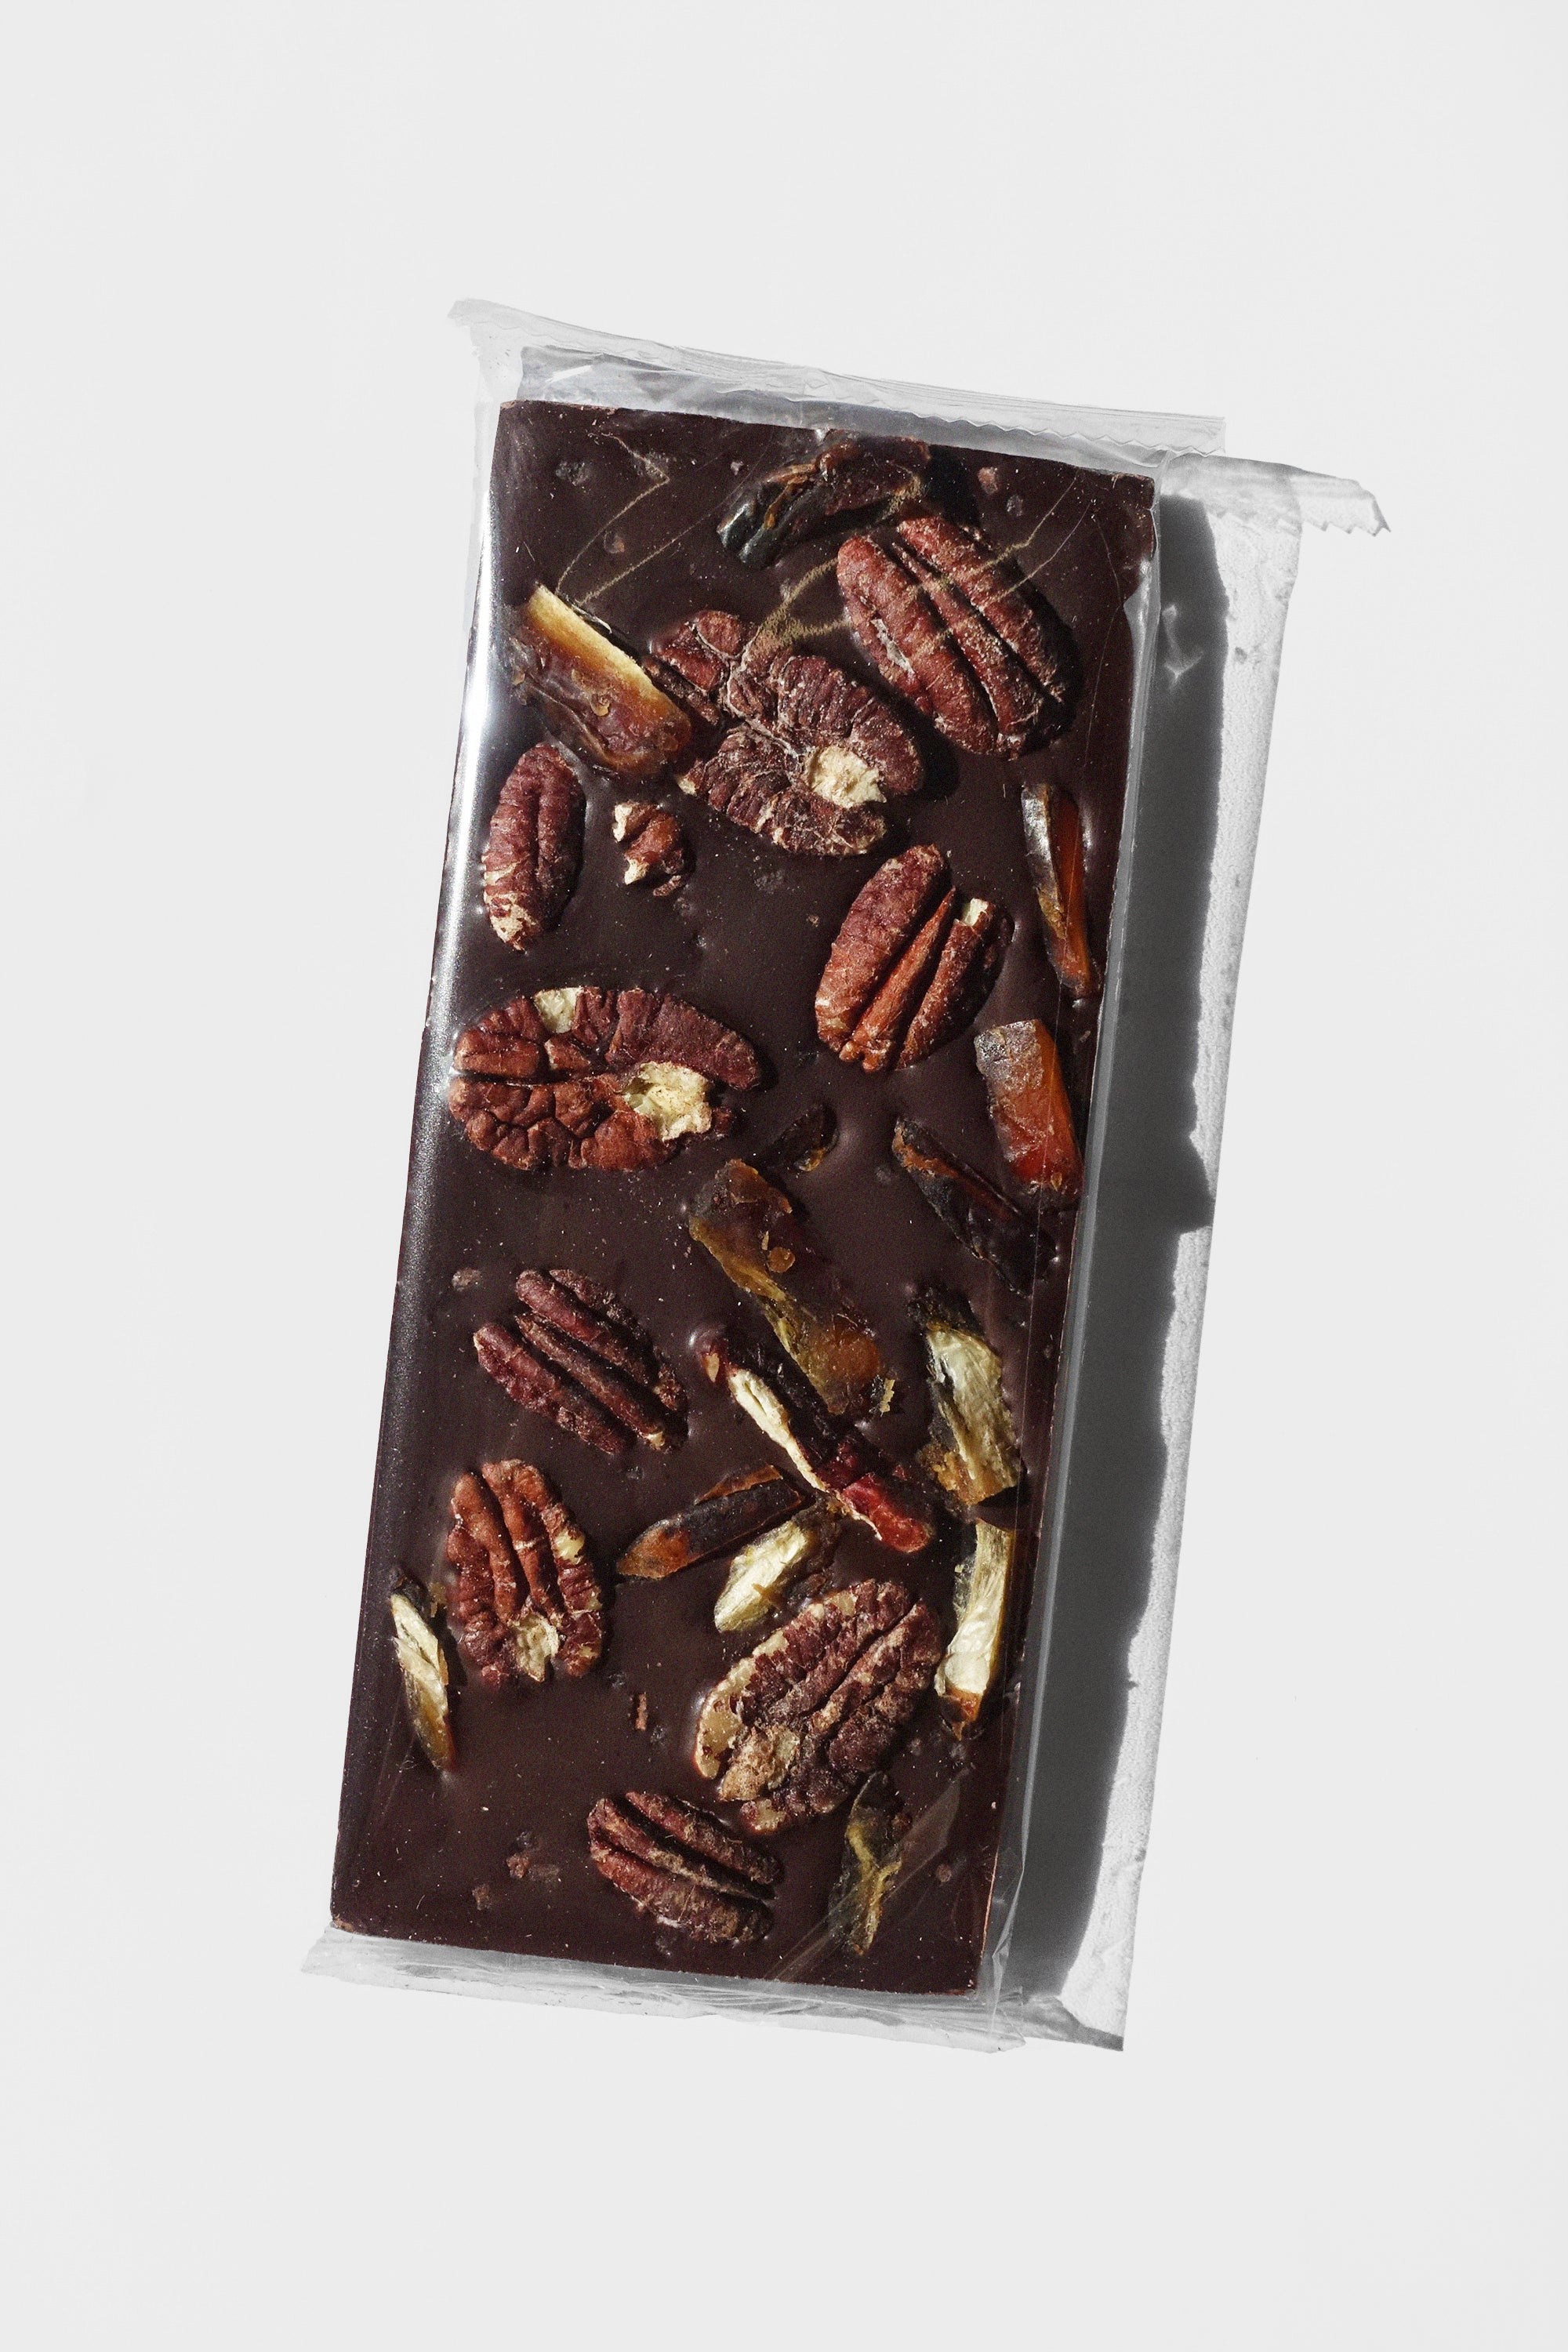 Pecan Date: Date-Sweetened Chocolate Bar